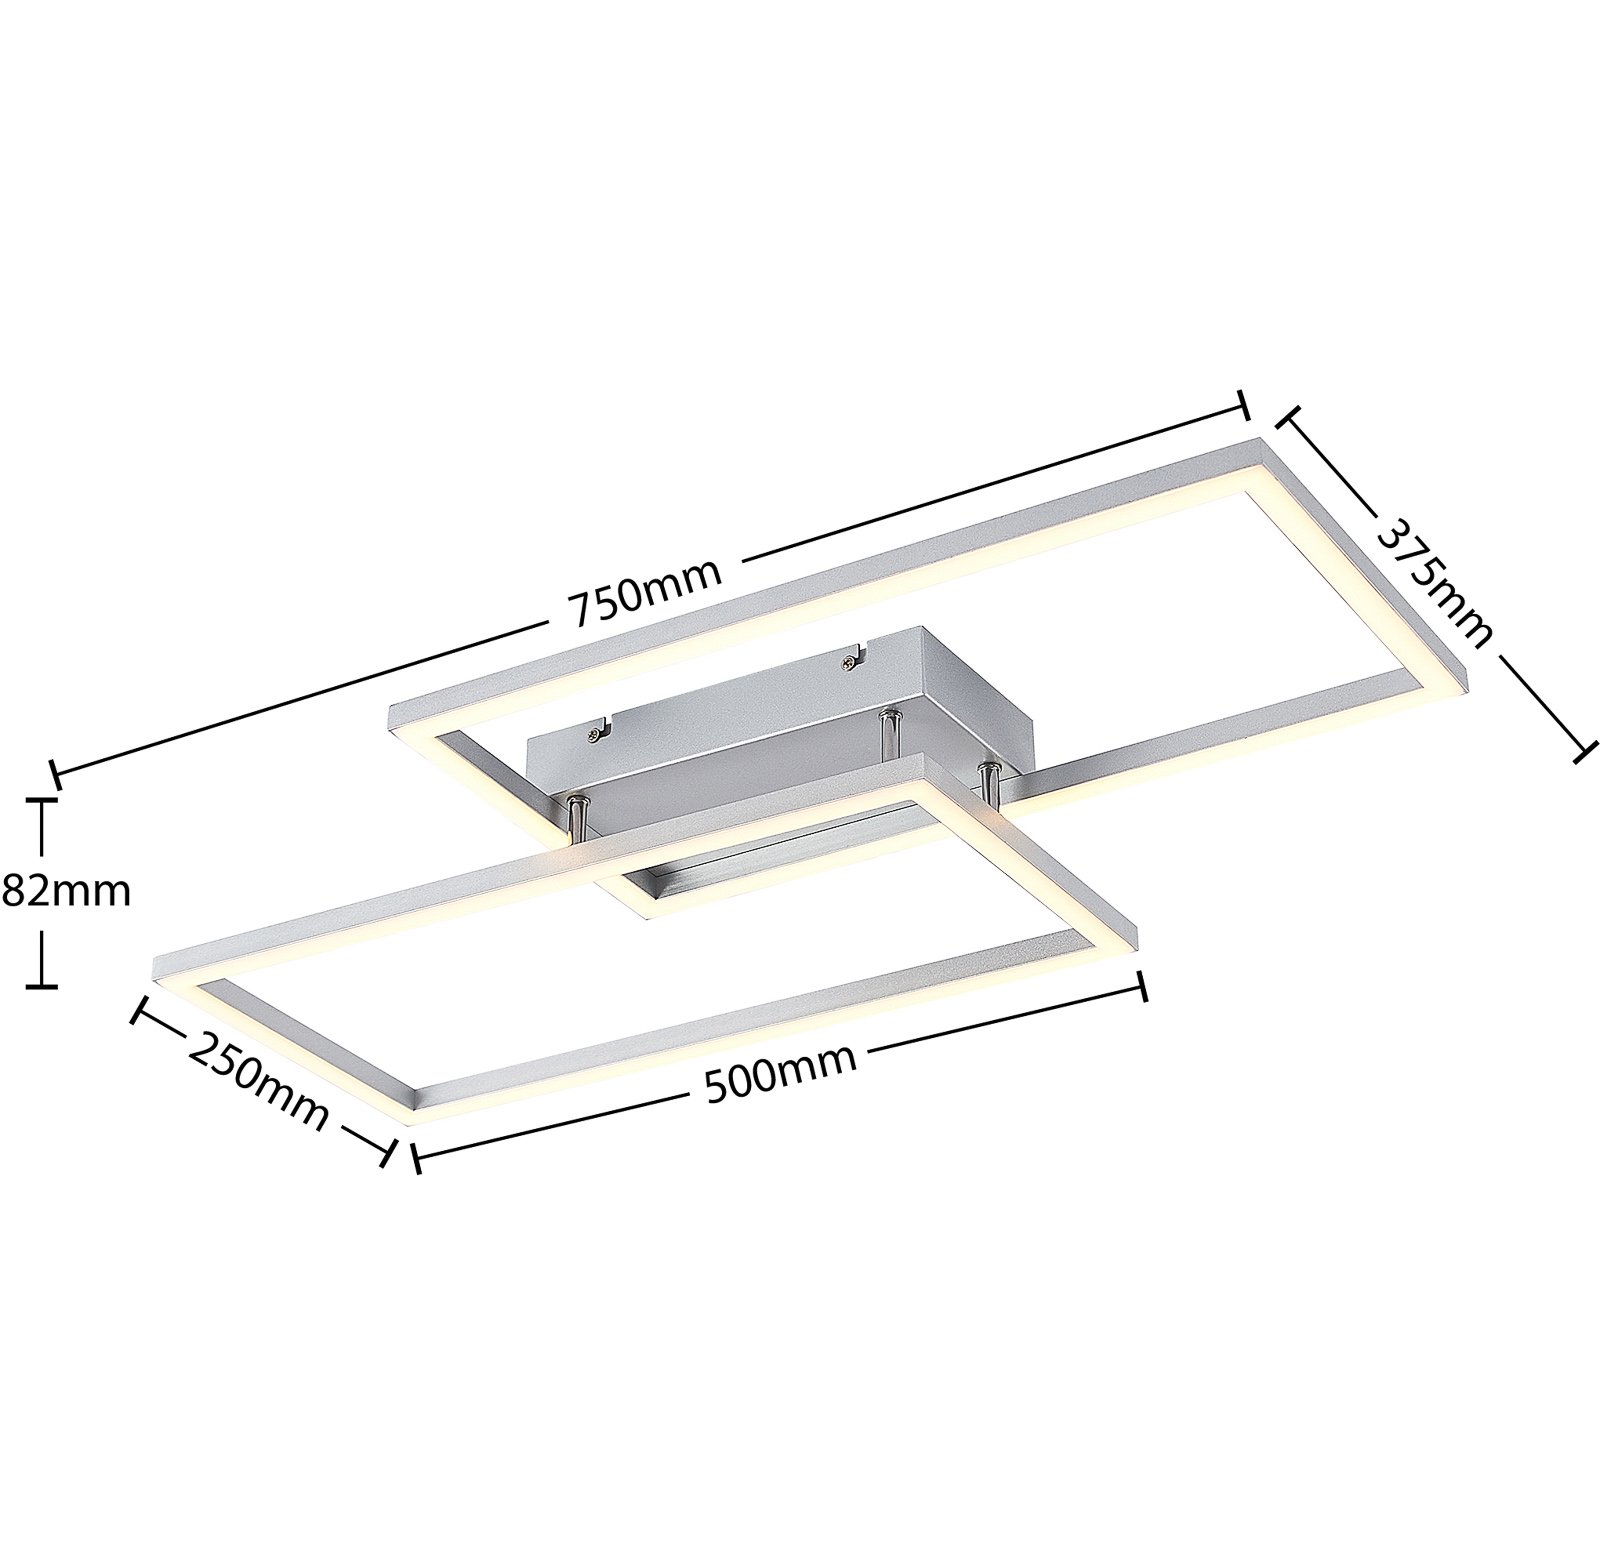 Lucande Muir plafonnier LED, rectangles